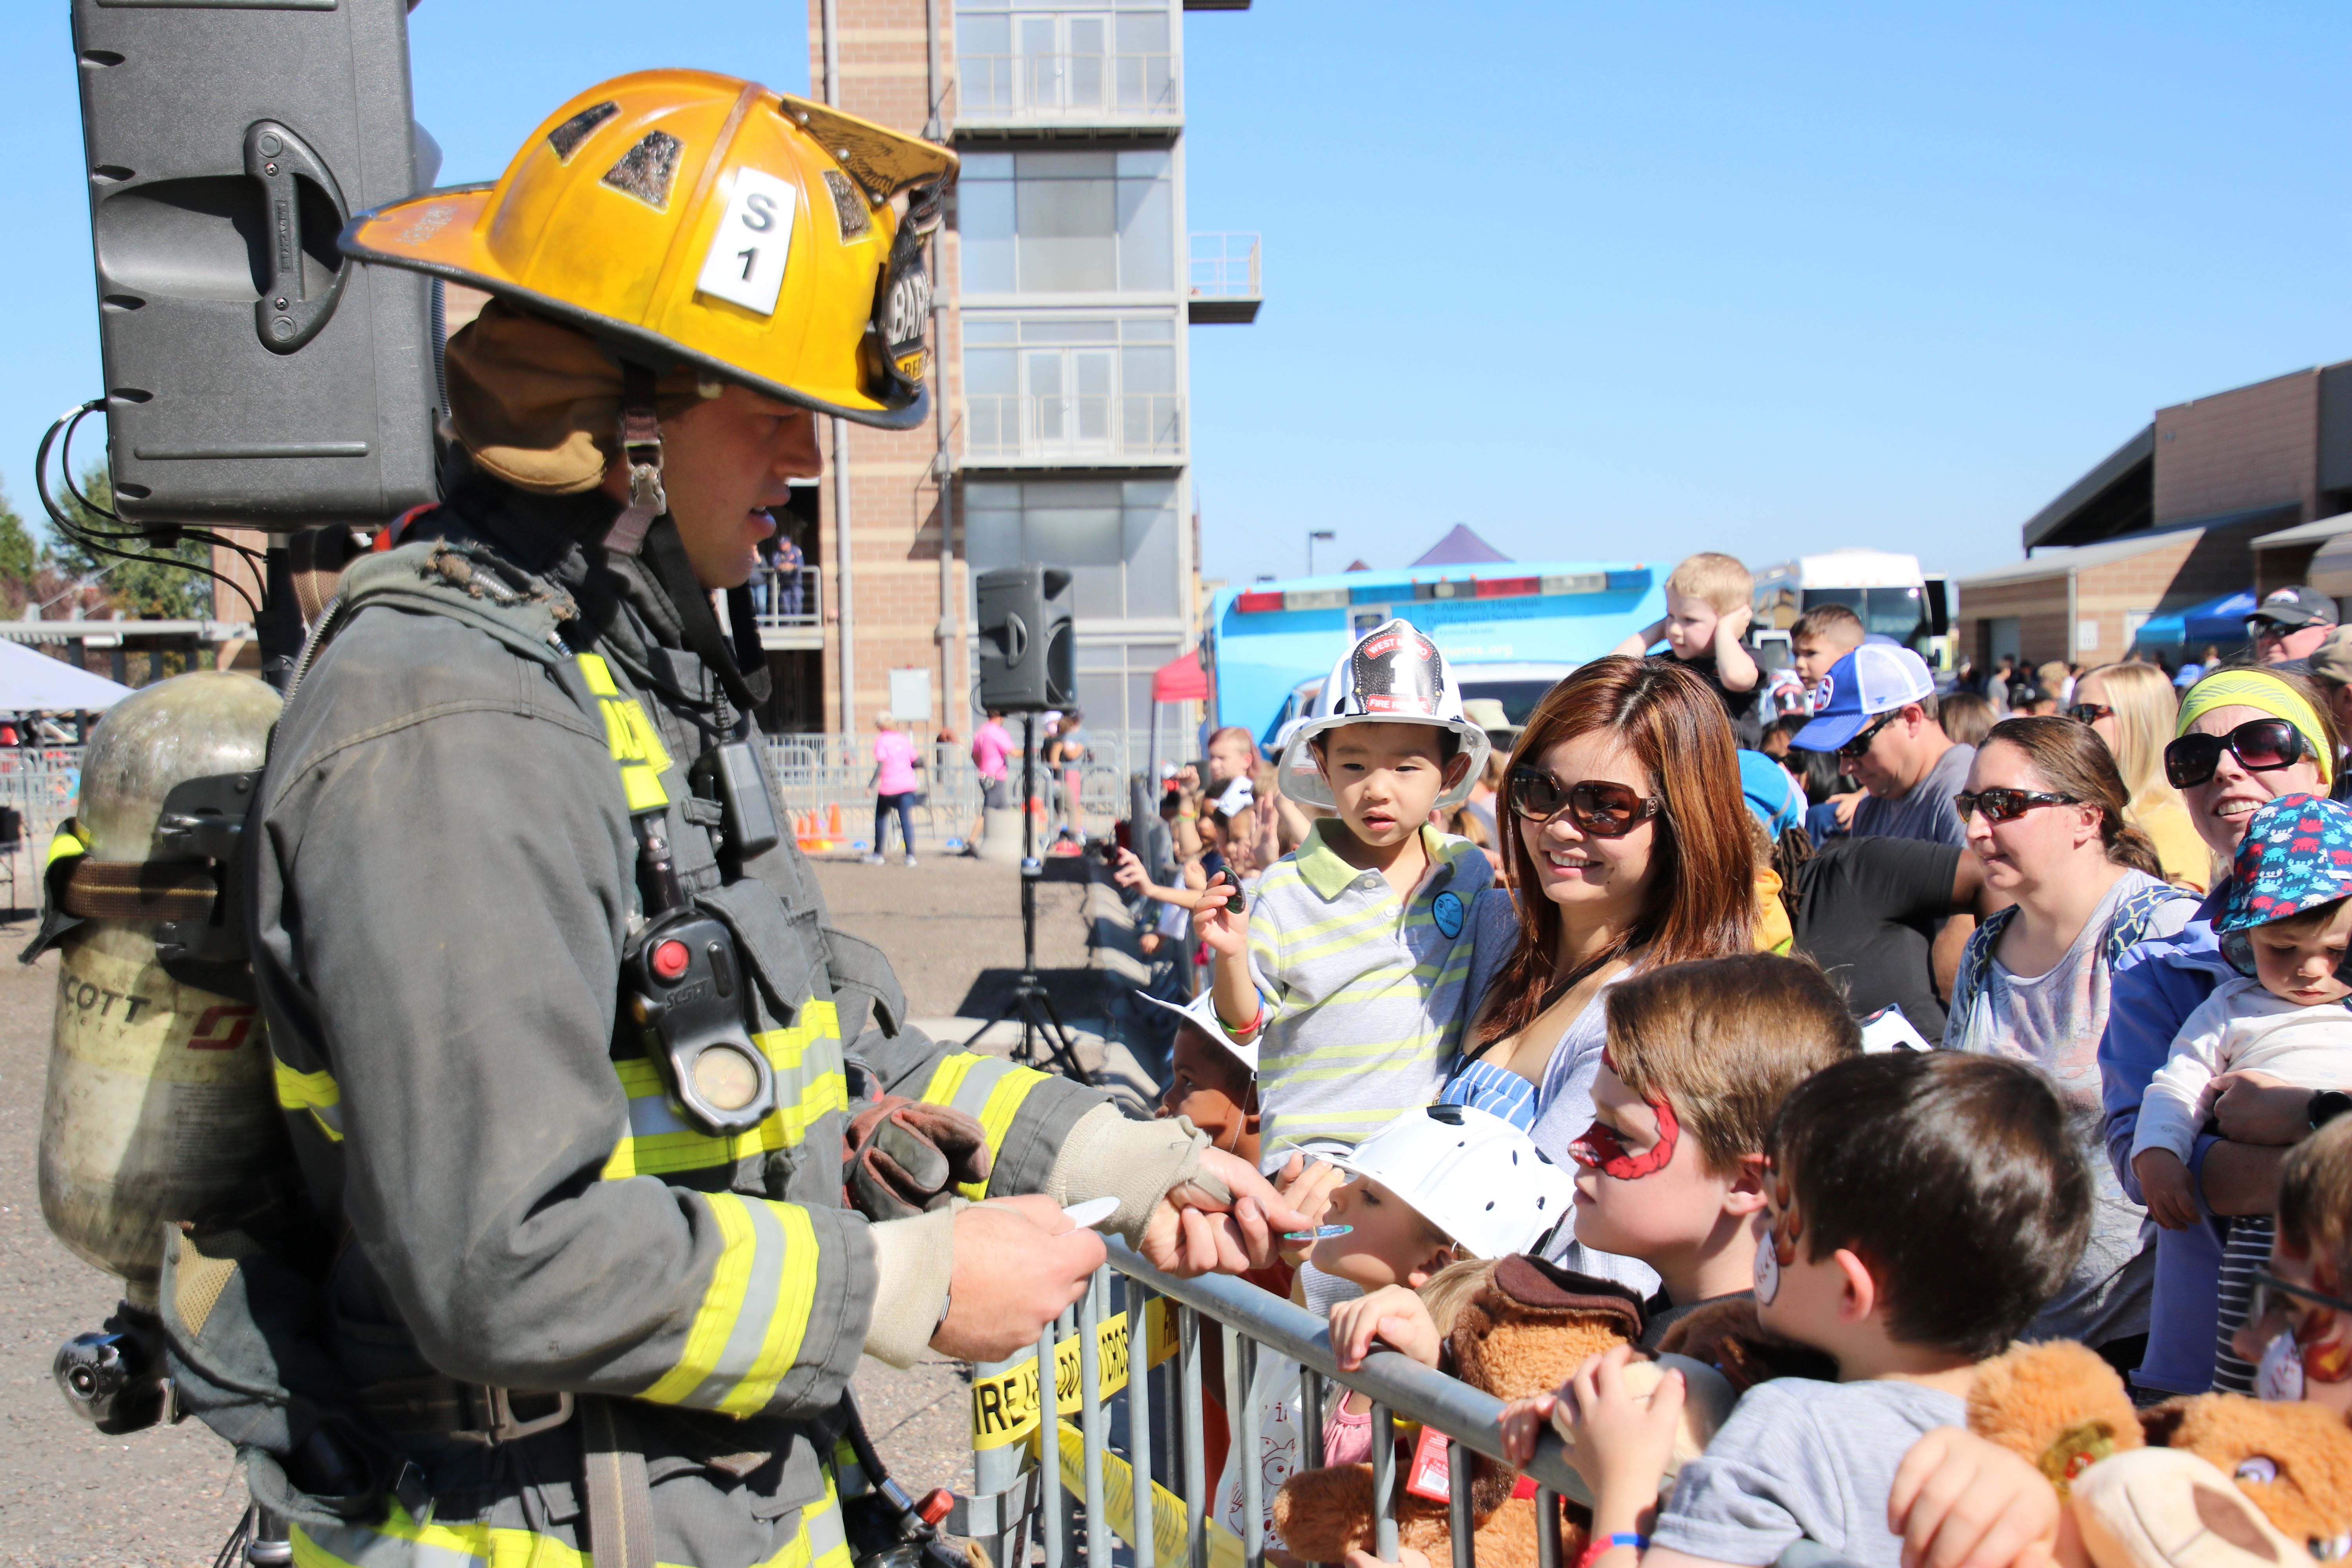 Firefighter talking to kids